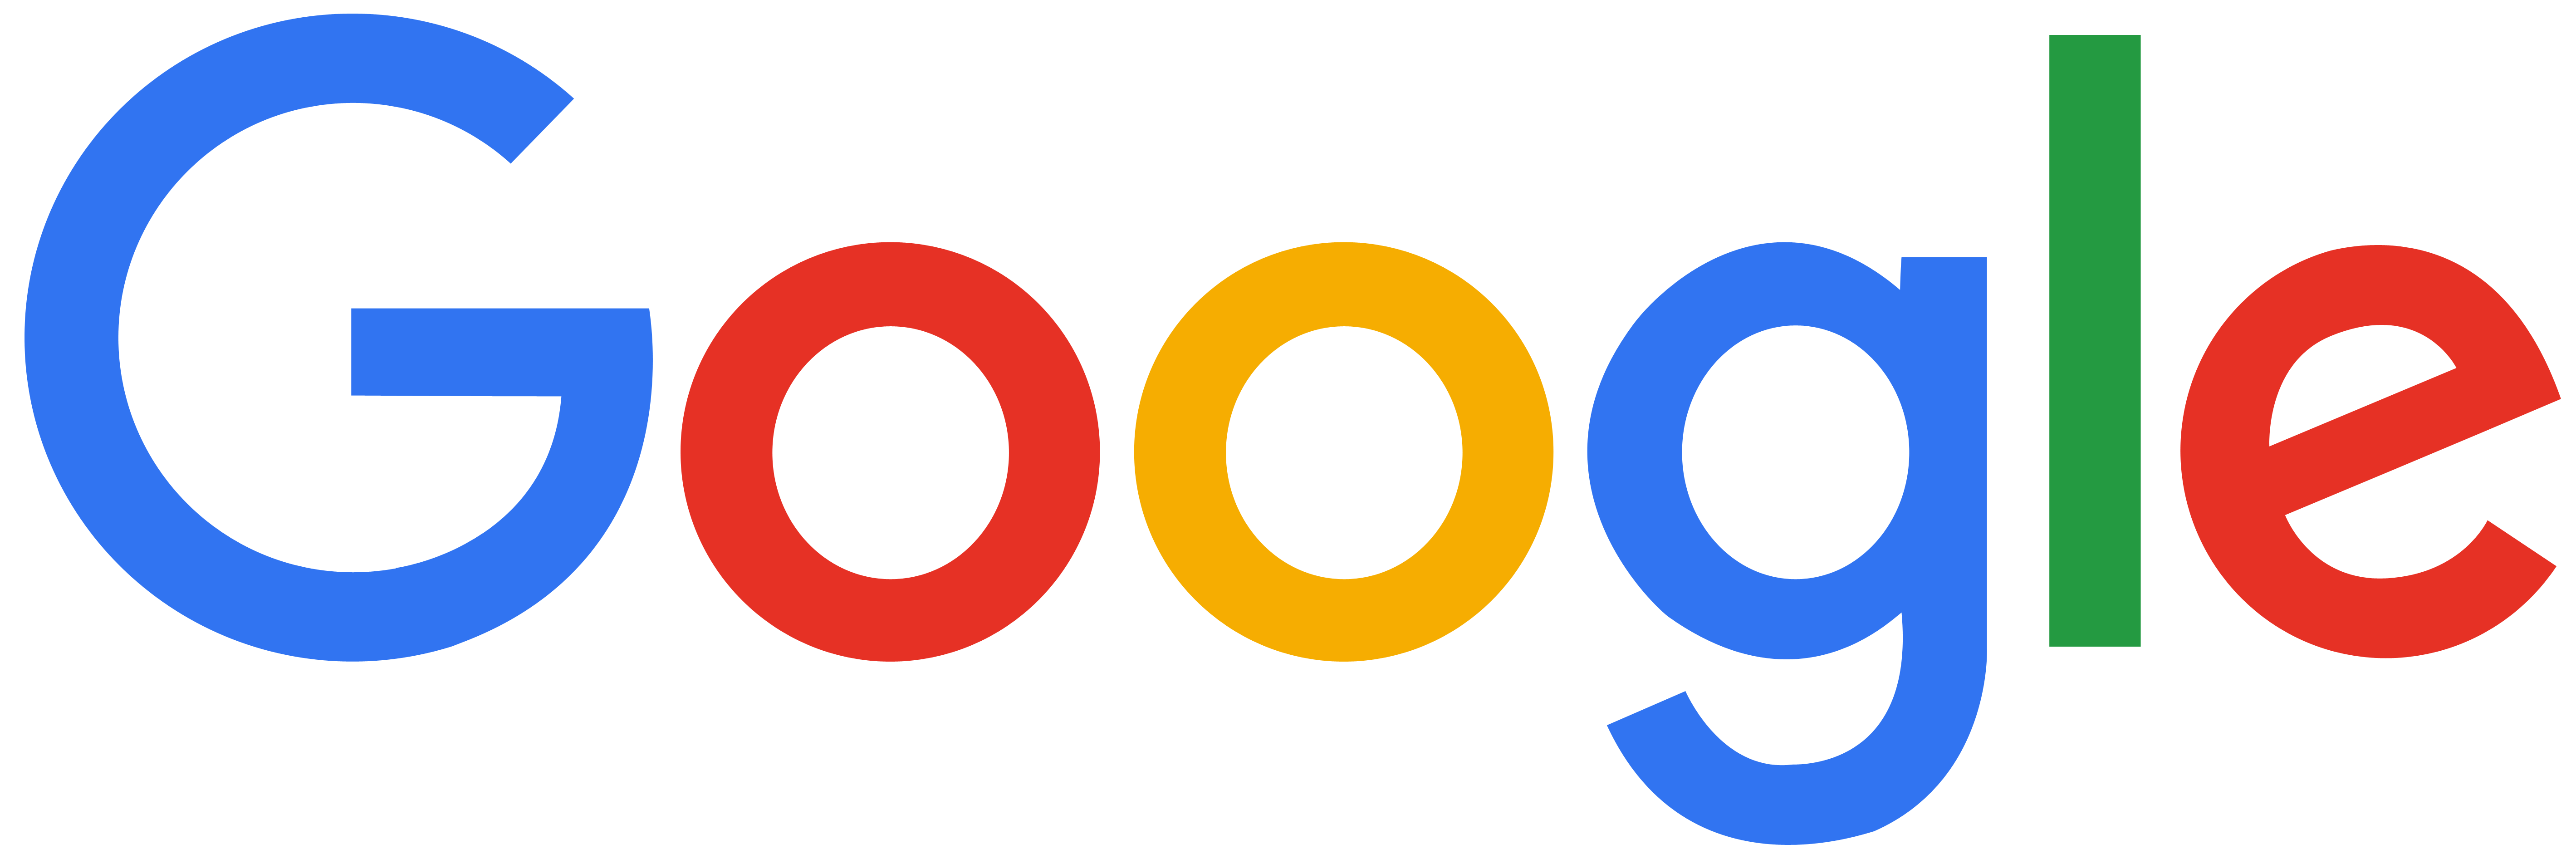 Google Logo History Png  Free Transparent PNG Logos